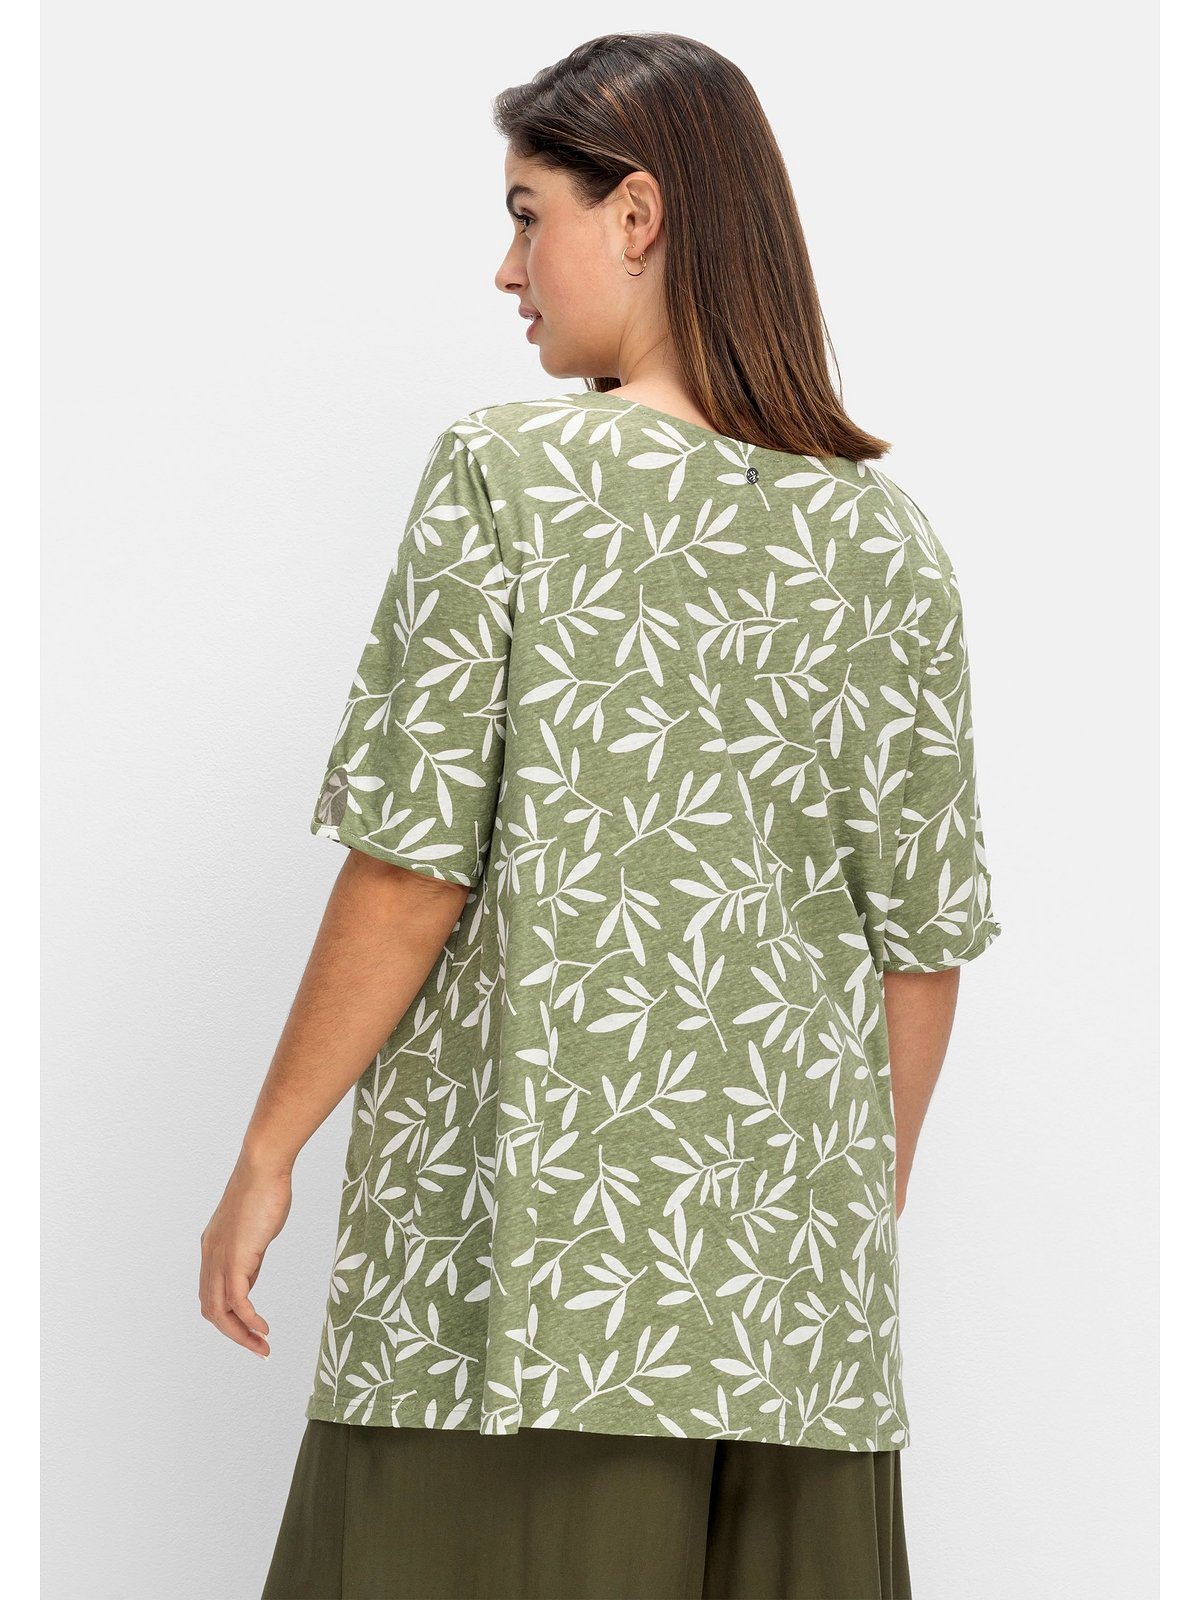 Sheego T-Shirt Blätterprint, gemustert Leinen-Mix im Große Größen mit khaki